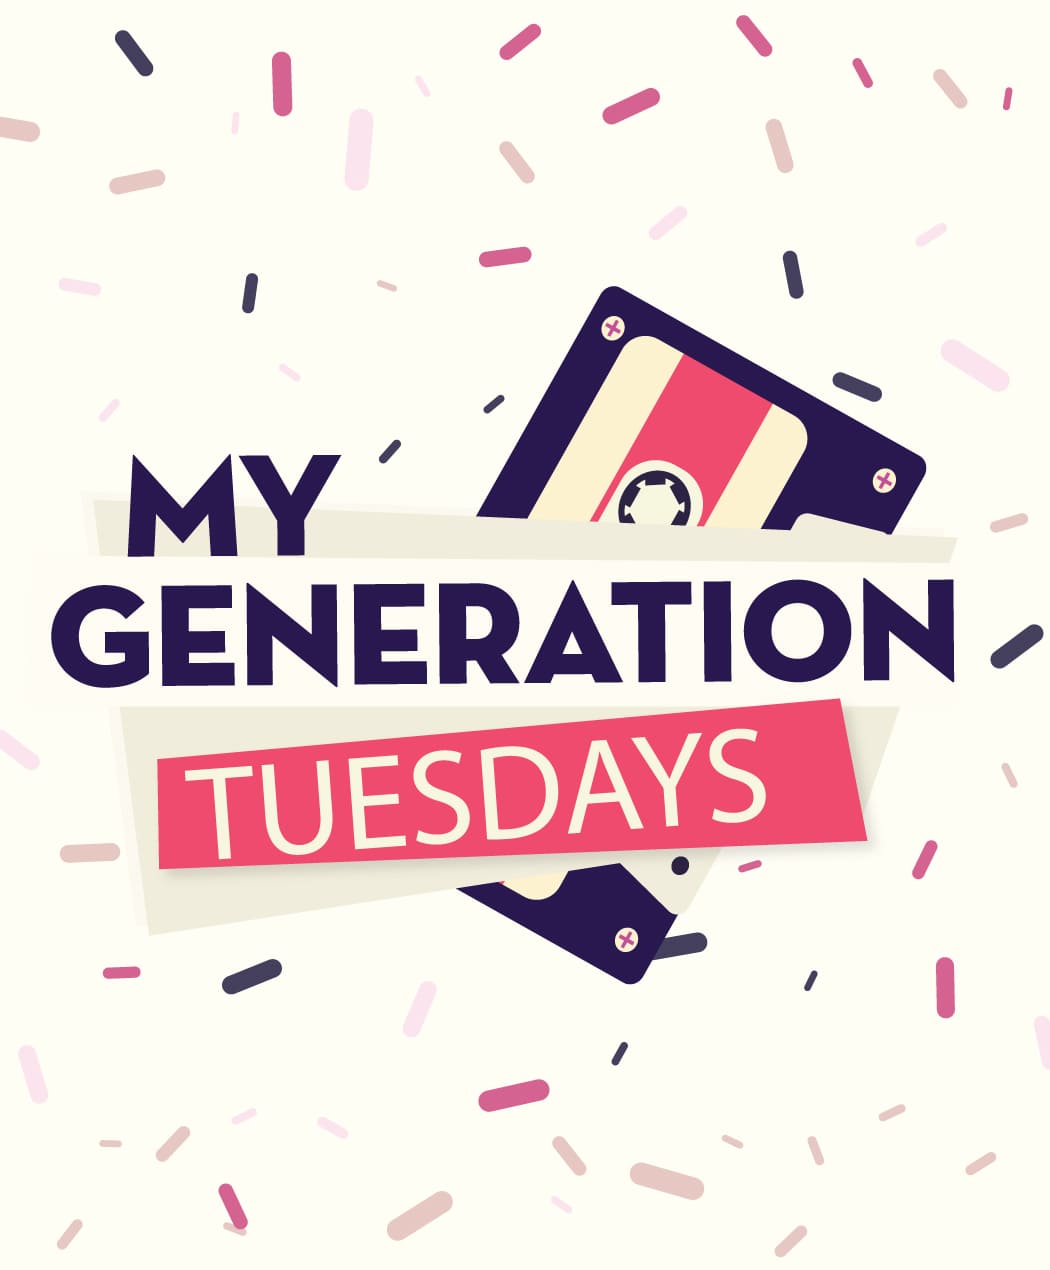 My Generation Tuesdays